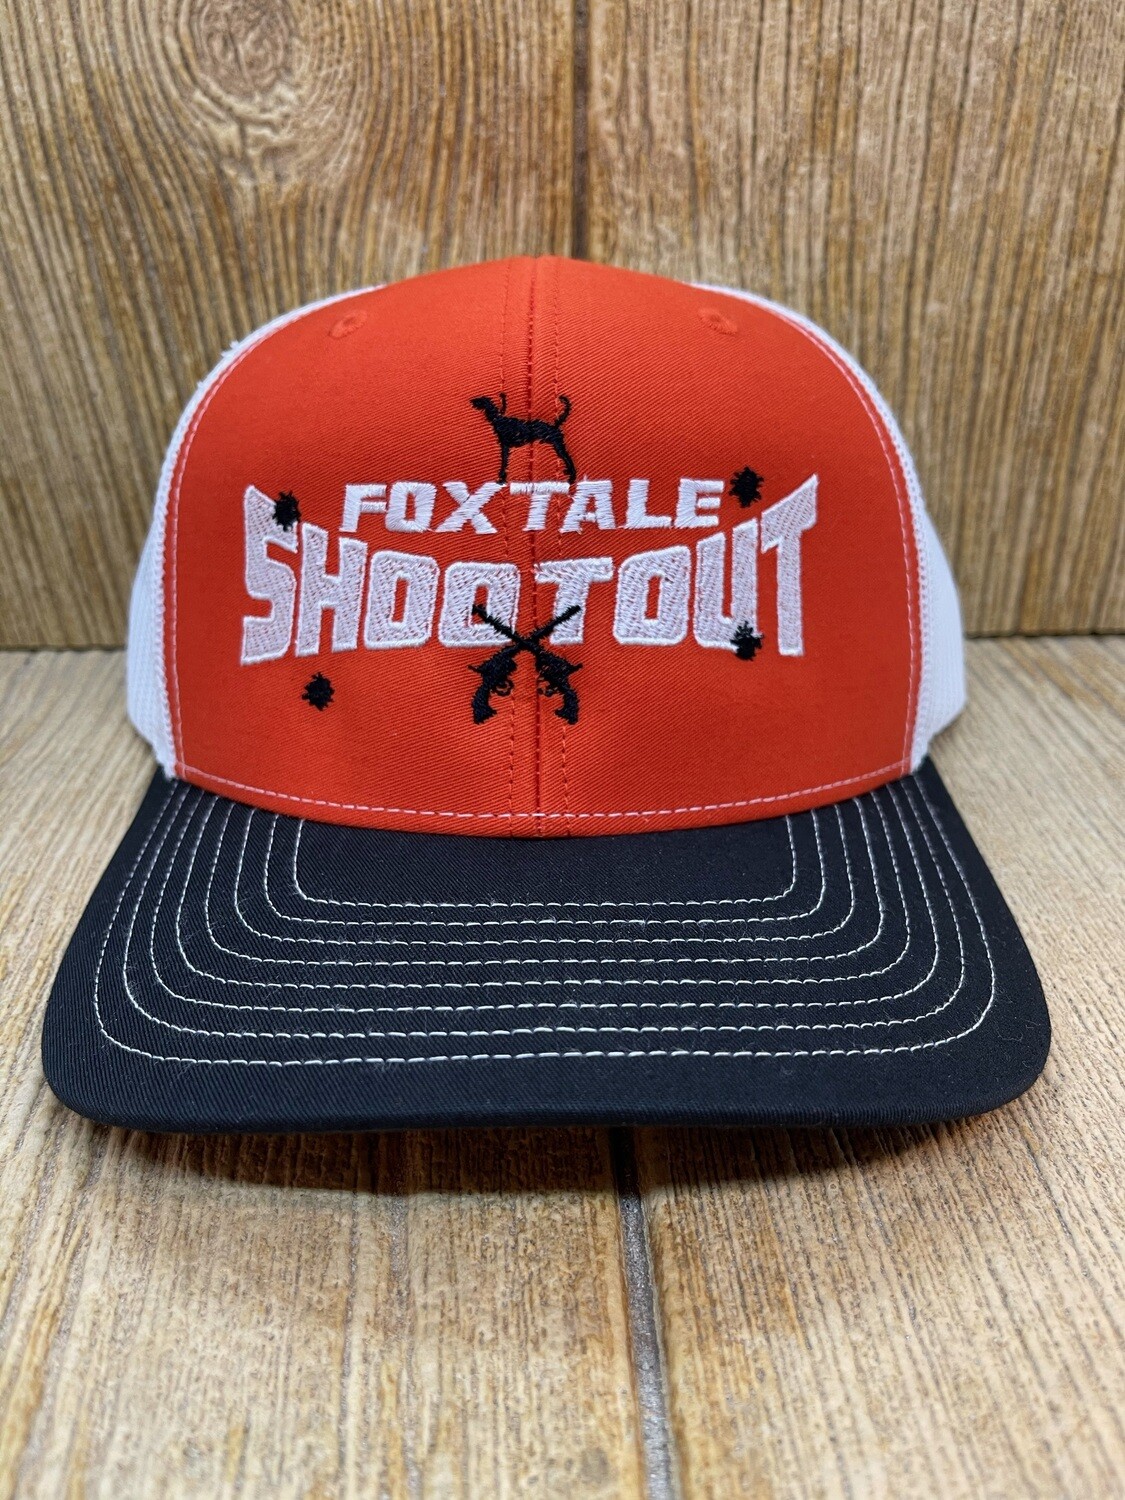 Fox Tale Shootout Adjustable Hat - Orange/Black/White